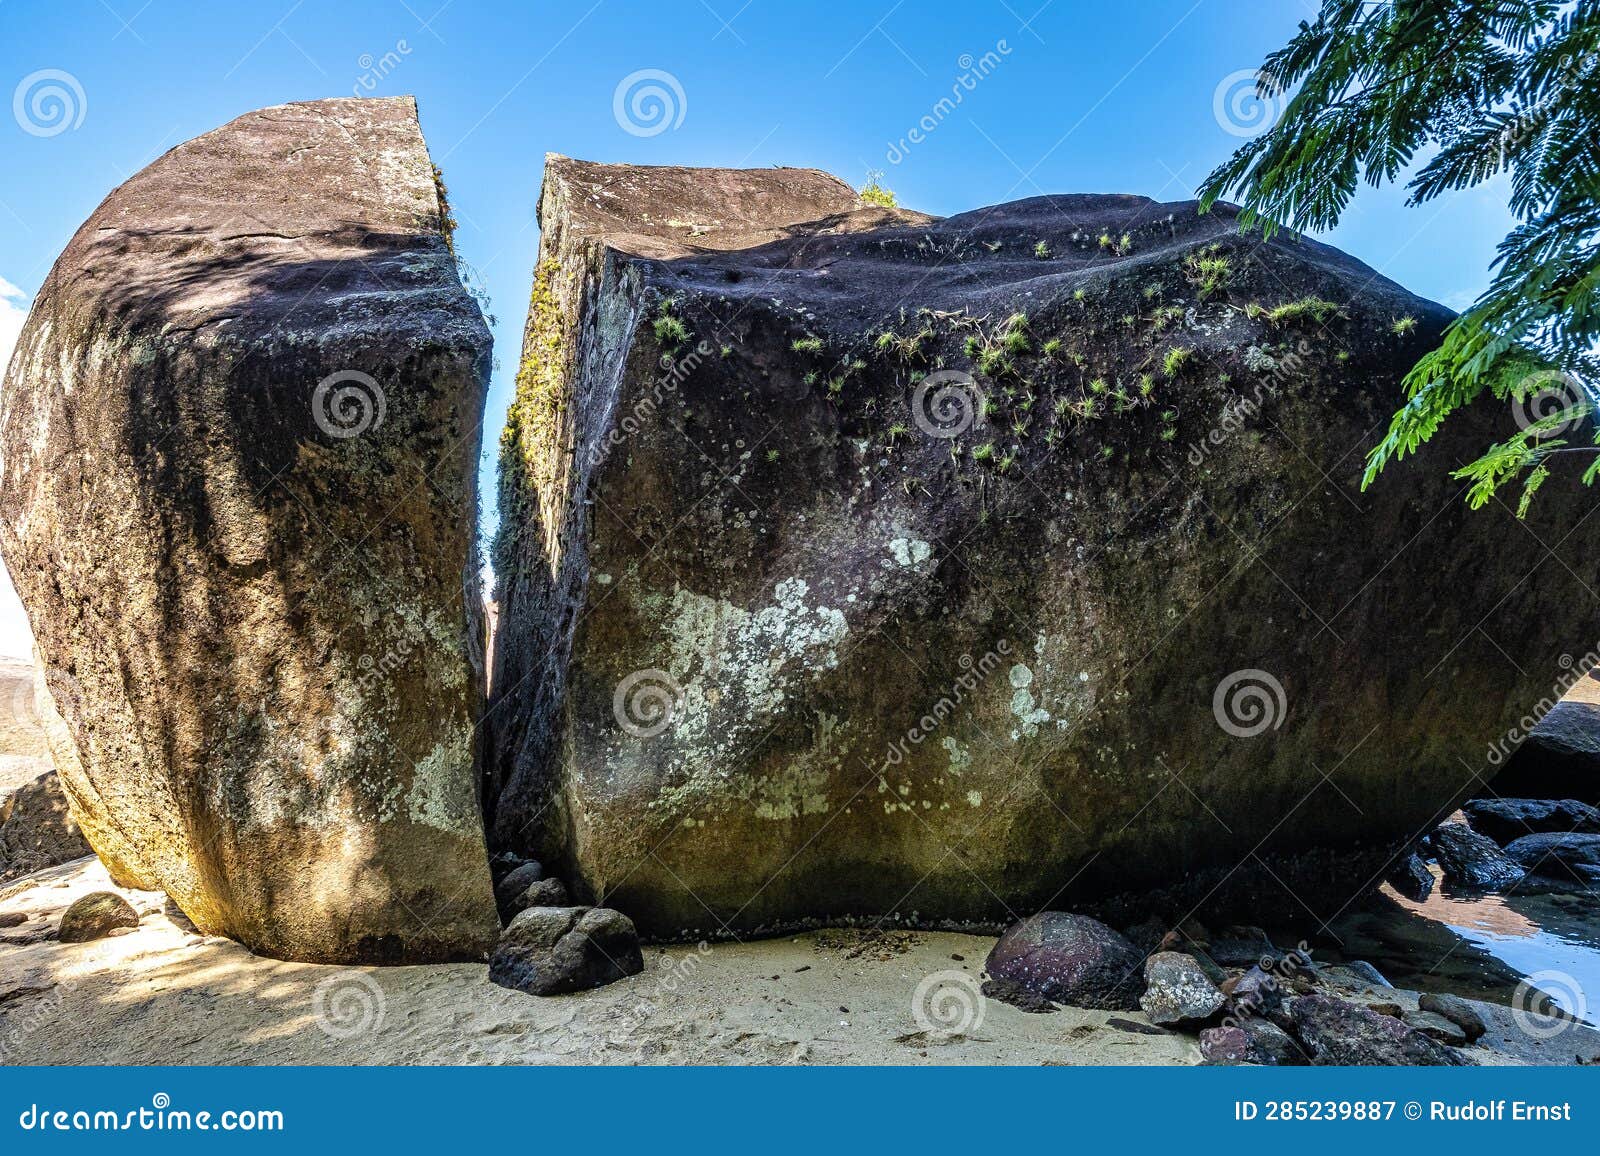 splitted stone at abraao preta beach on big island ilha grande in angra dos reis, rio de janeiro, brazil